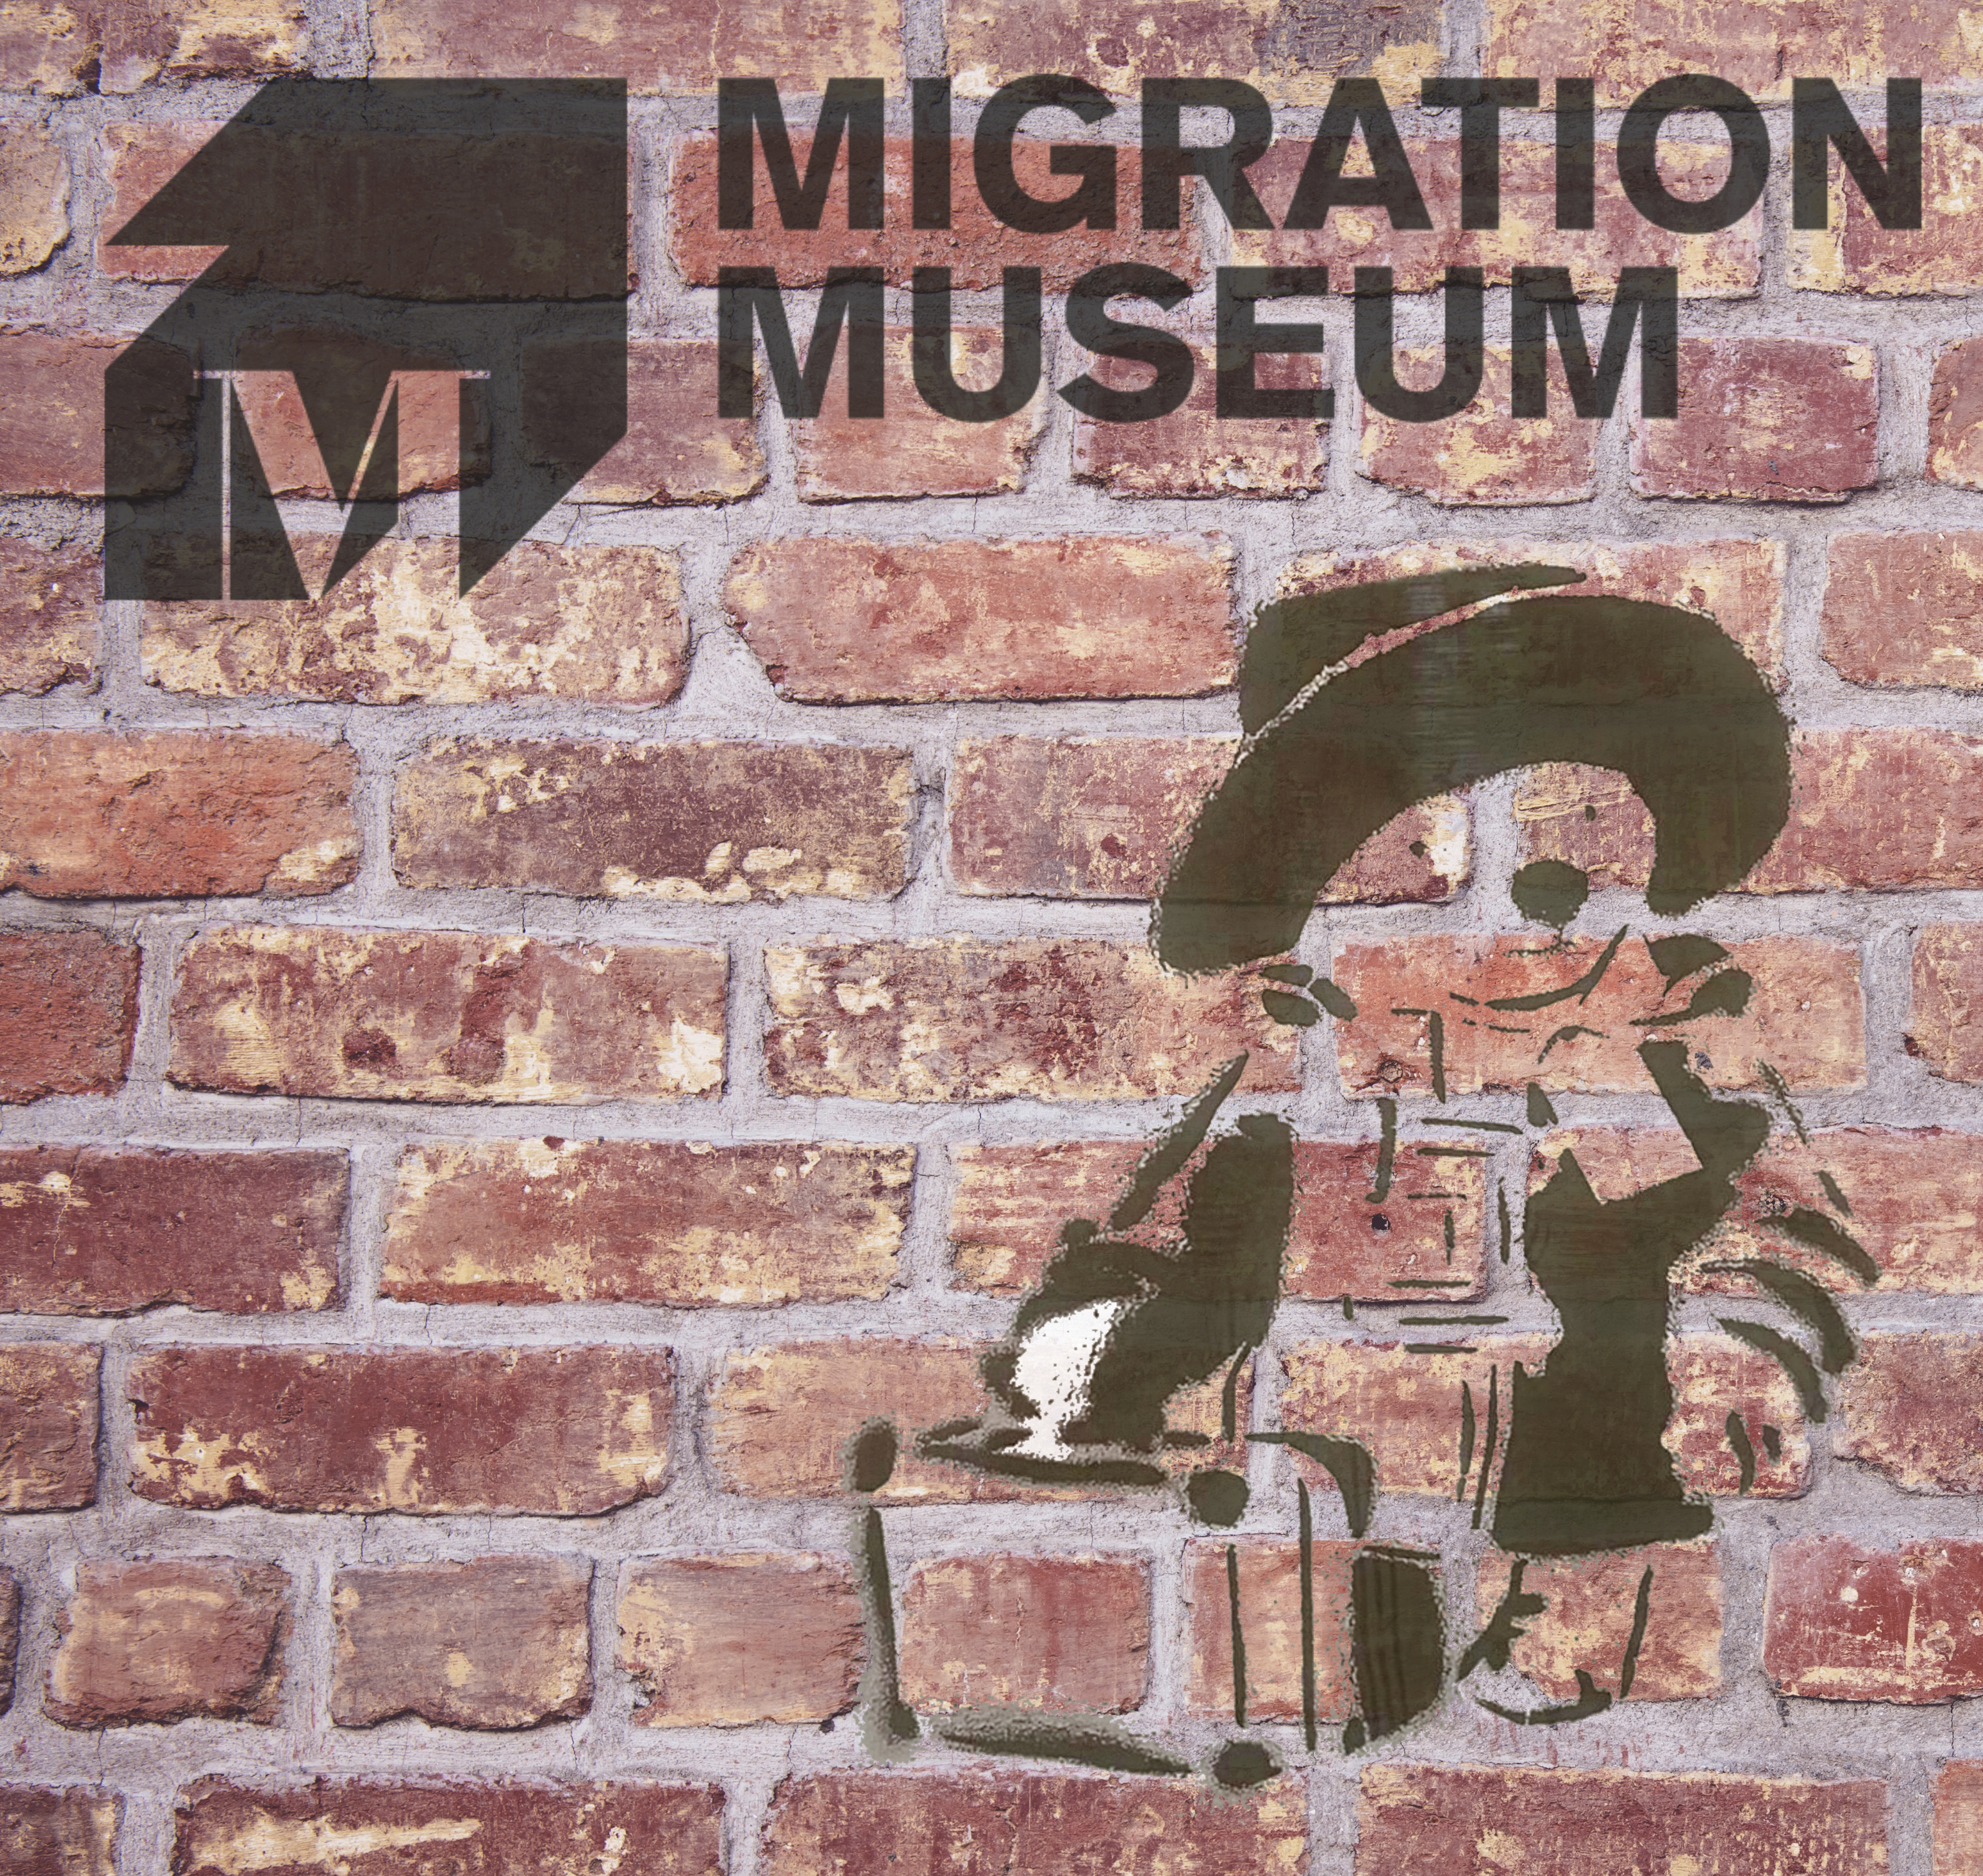 Bonus Episode: More From the Migration Museum